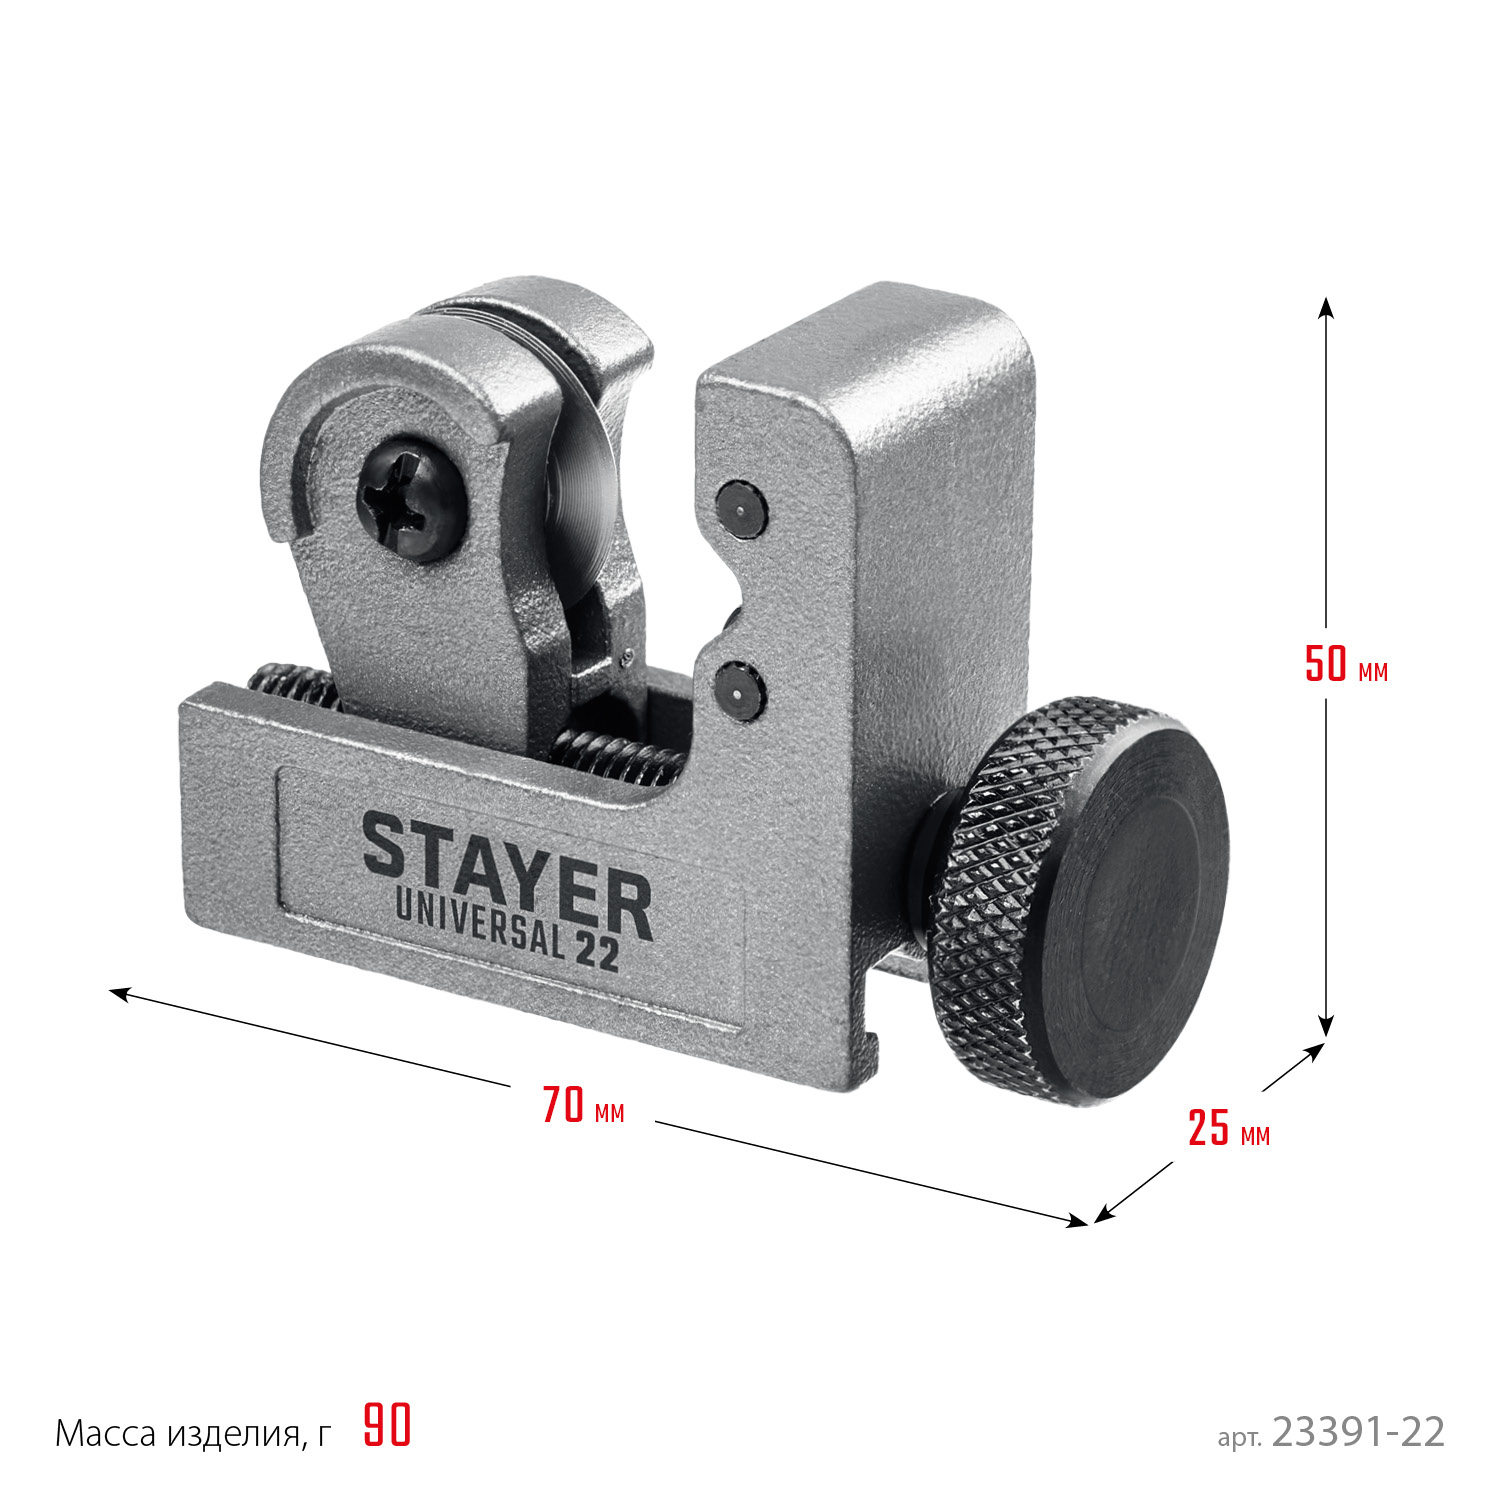 STAYER Universal-22, 3 - 22 мм, труборез для меди и алюминия, Professional (23391-22)